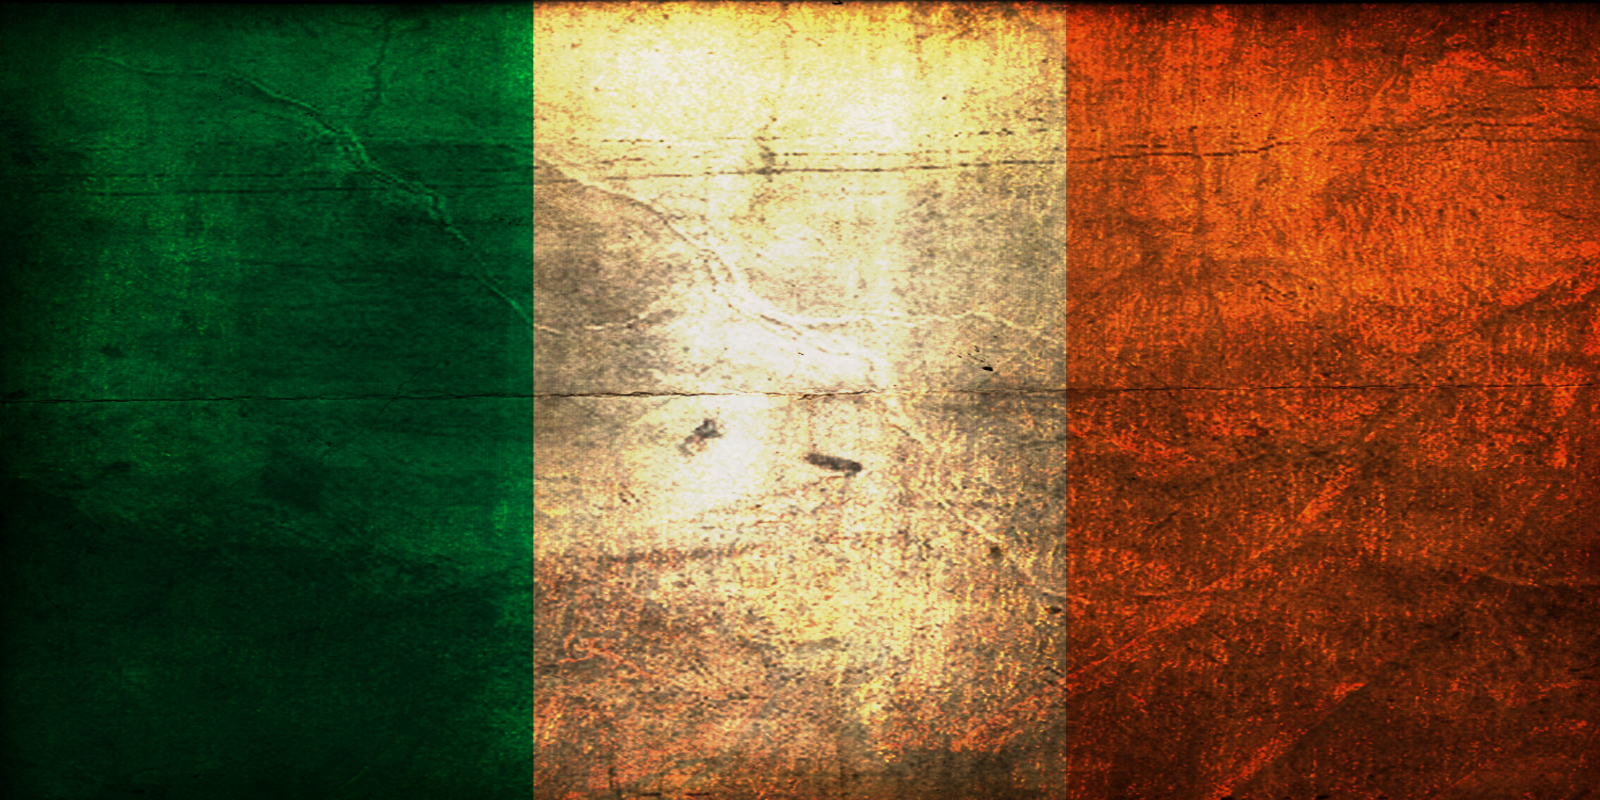  Flag of Ireland Google Wallpapers Flag of Ireland Google Backgrounds 1600x800